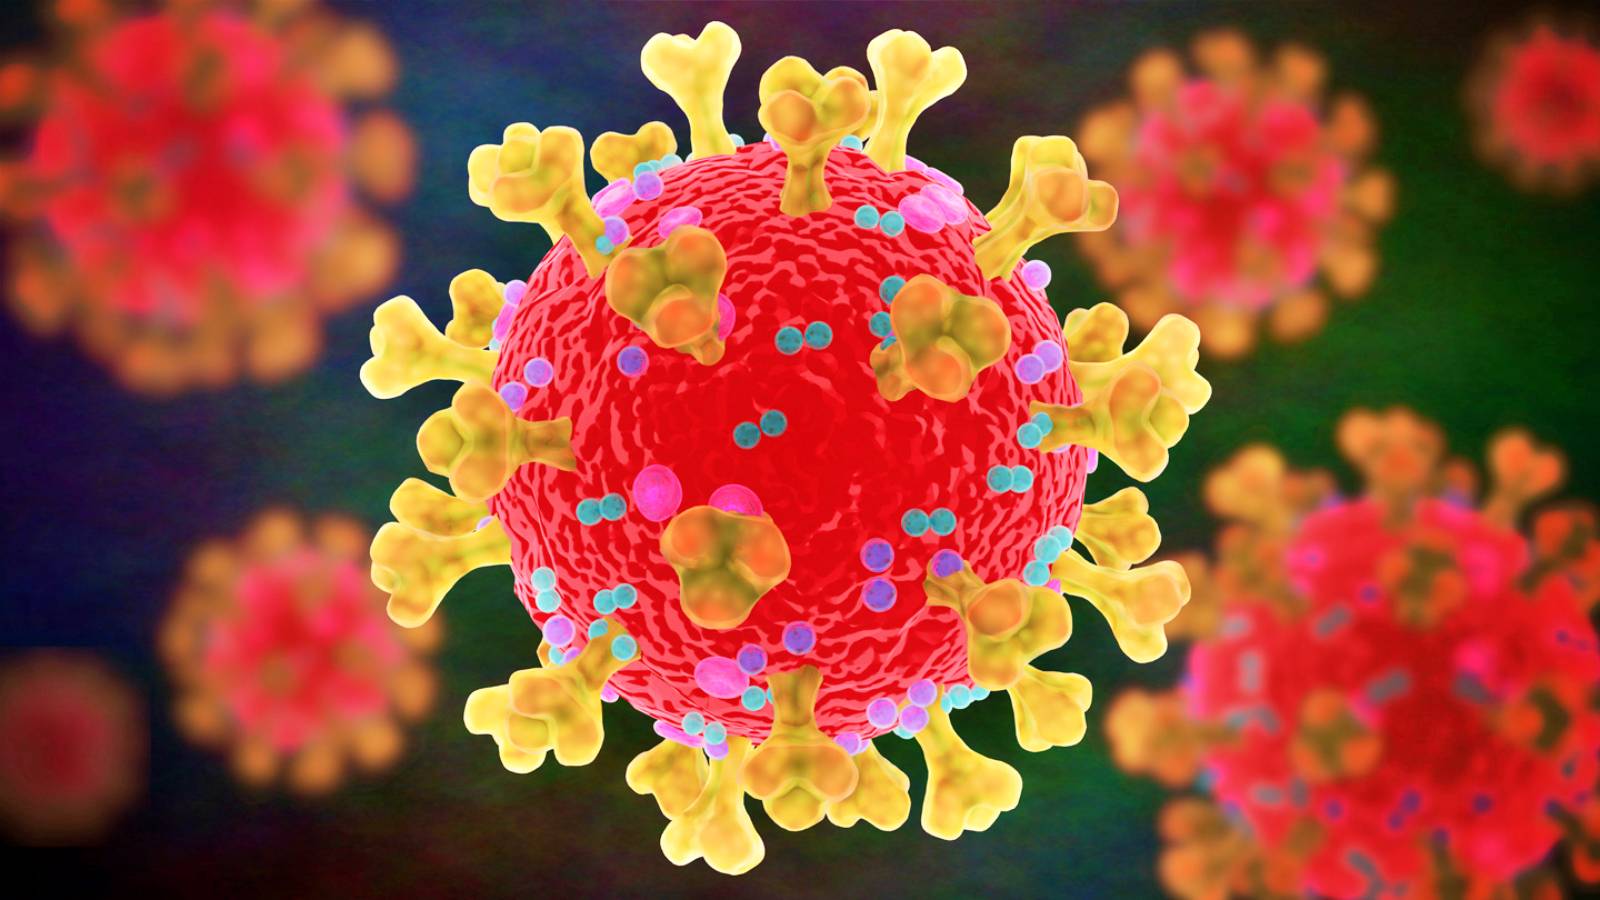 Coronavirus Romania Large Number of New Cases October 24, 2021